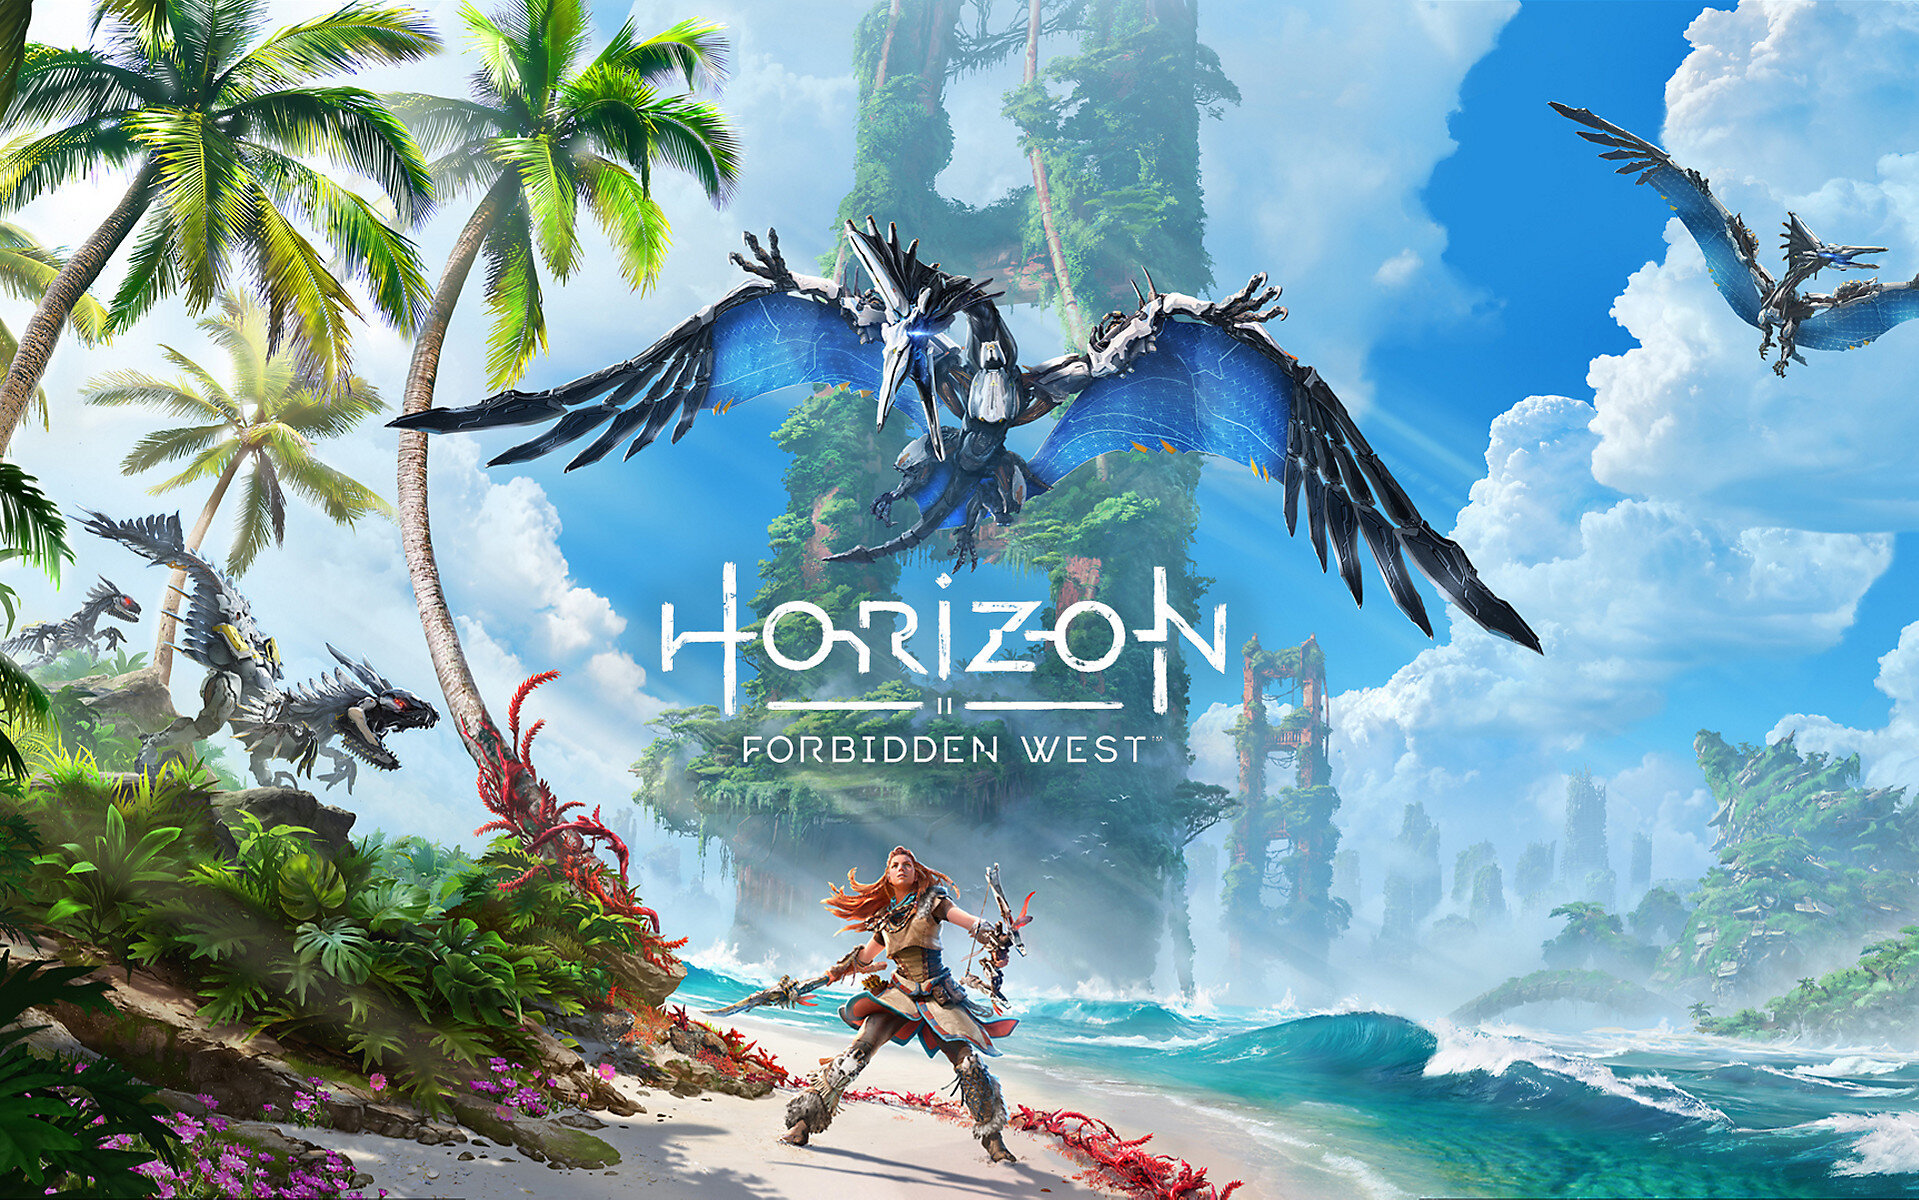 Horizon Forbidden West - Promise of the West (Joris de Man feat. Julie Elven)